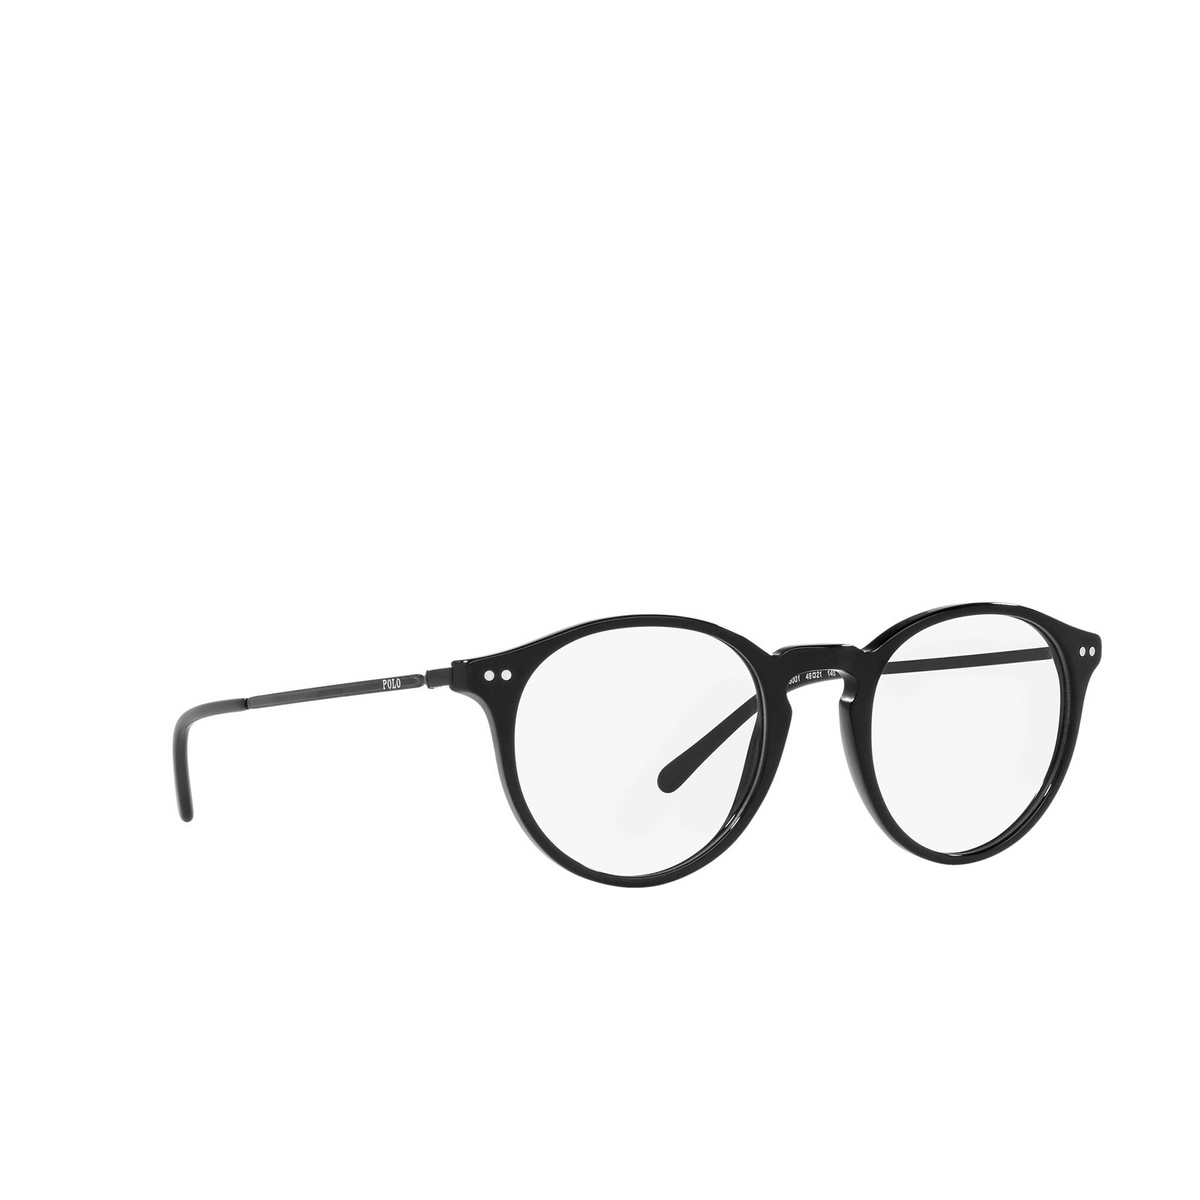 Polo Ralph Lauren® Round Eyeglasses: PH2227 color Shiny Black 5001 - three-quarters view.